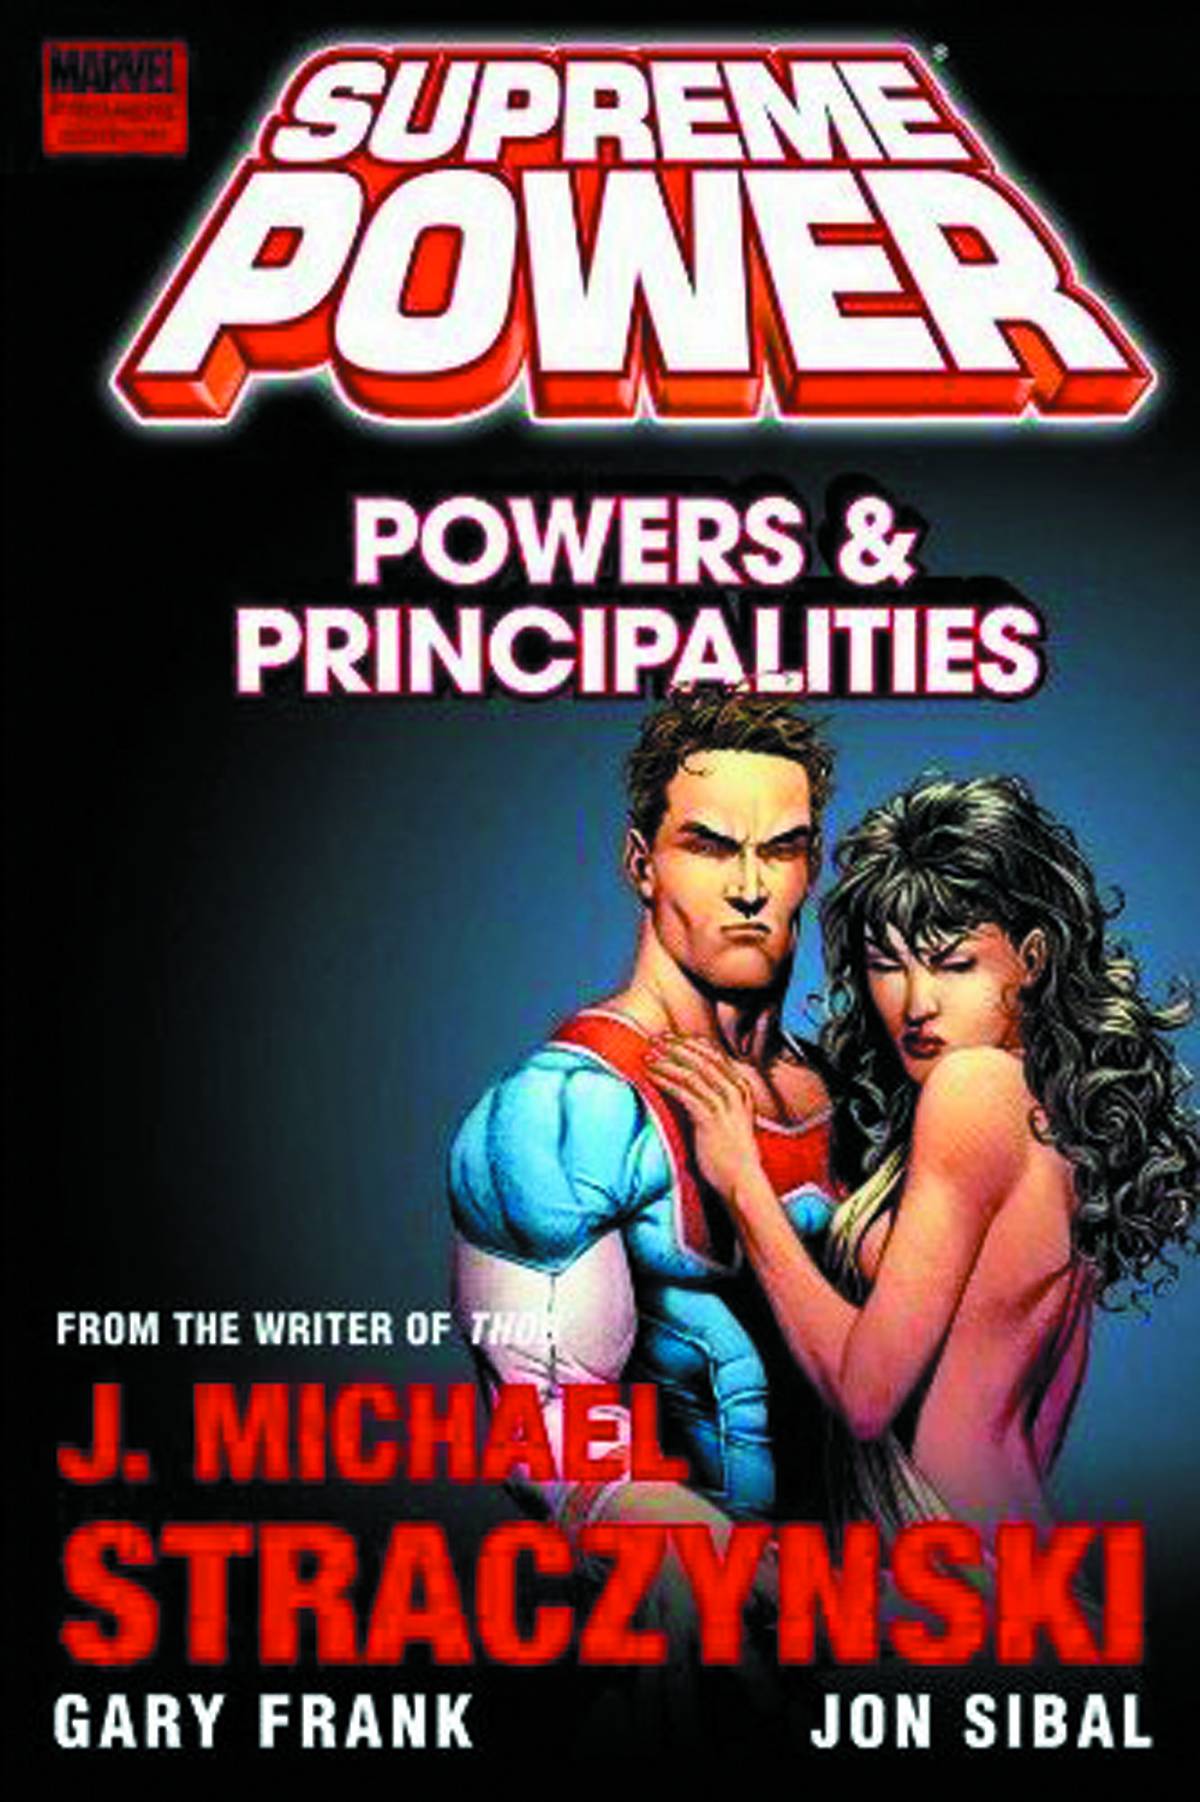 Supreme Power Premium Hardcover Powers & Principalities